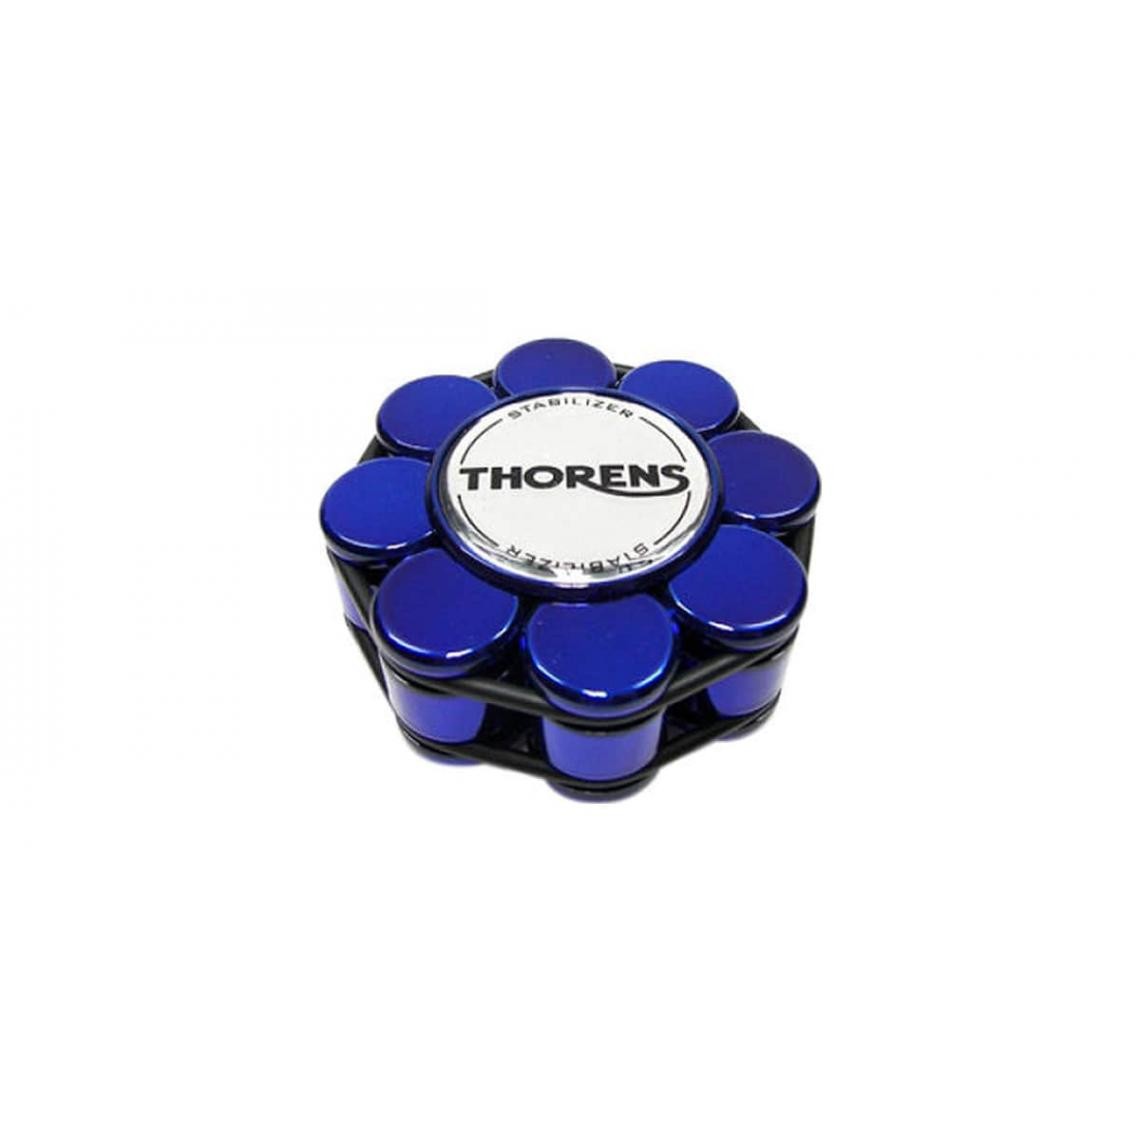 Thorens - Palet Presseur Thorens pour Platine Vinyle Stabilizer Bleu - Platine